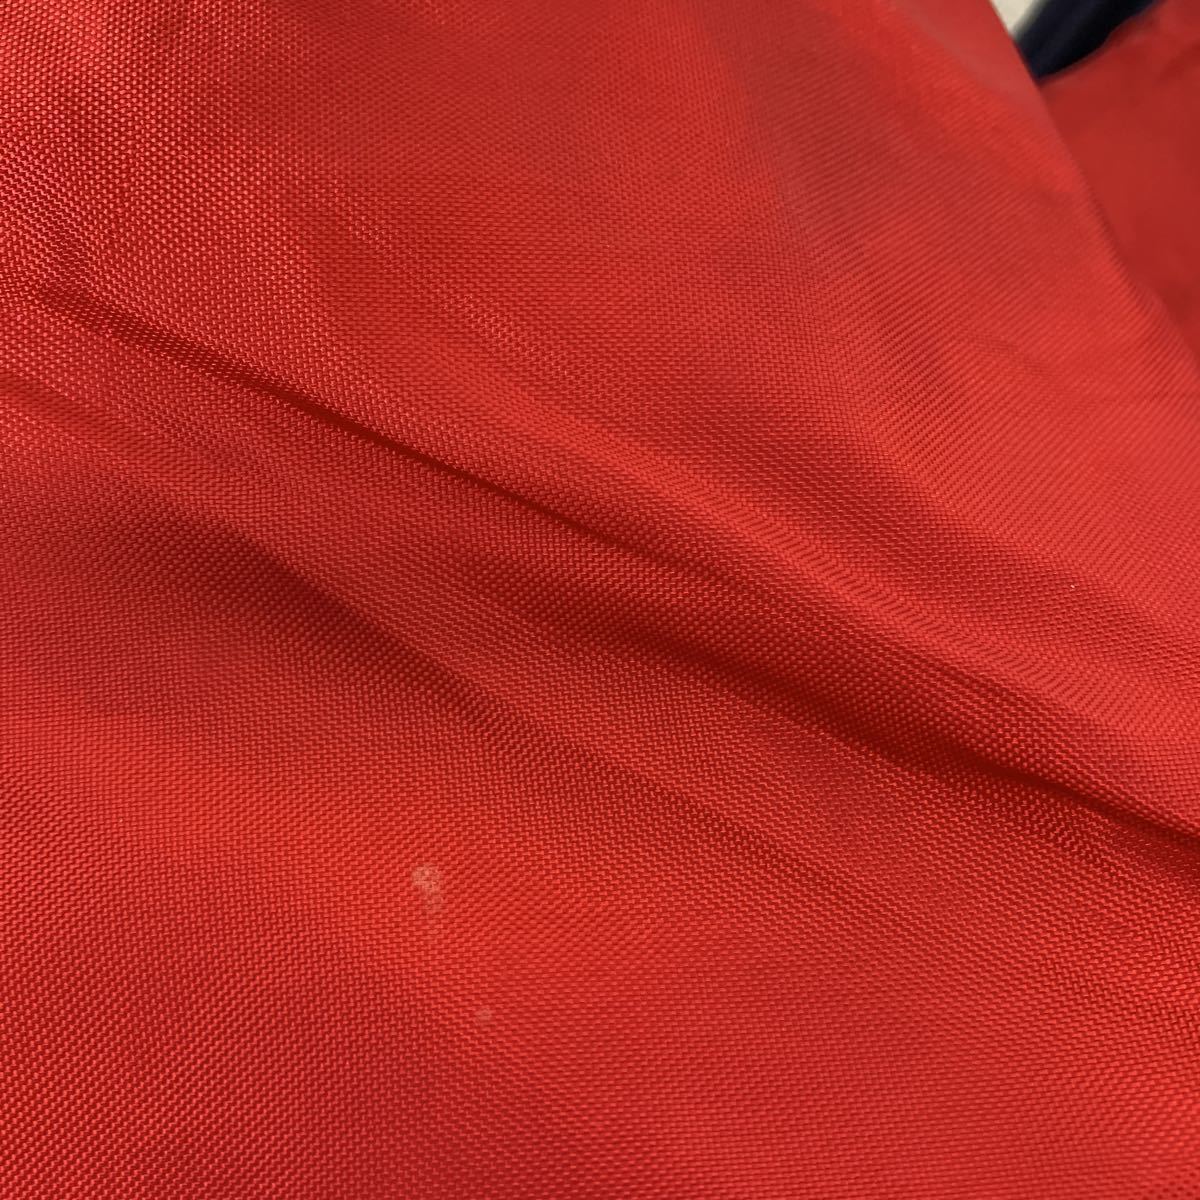 WEST WIND нейлон куртка Youth L красный ткань to окно Kids б/у одежда . America скупка a510-6173